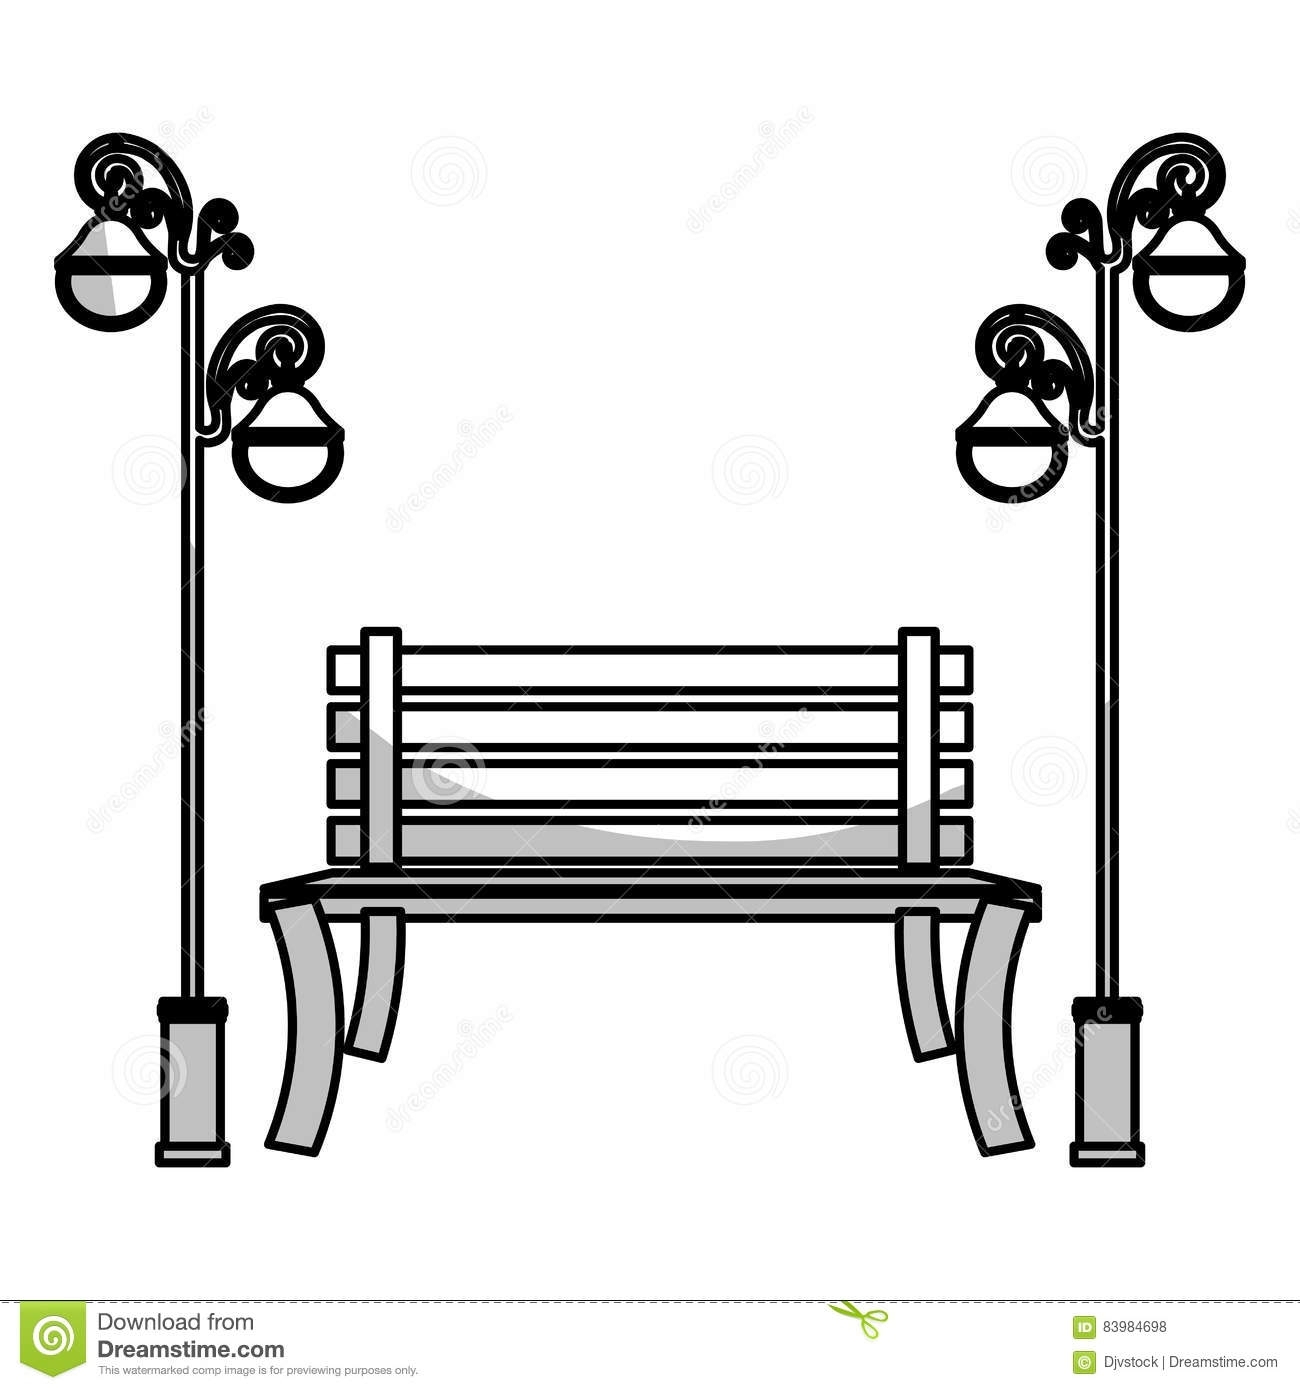 Эскиз скамейки для парка